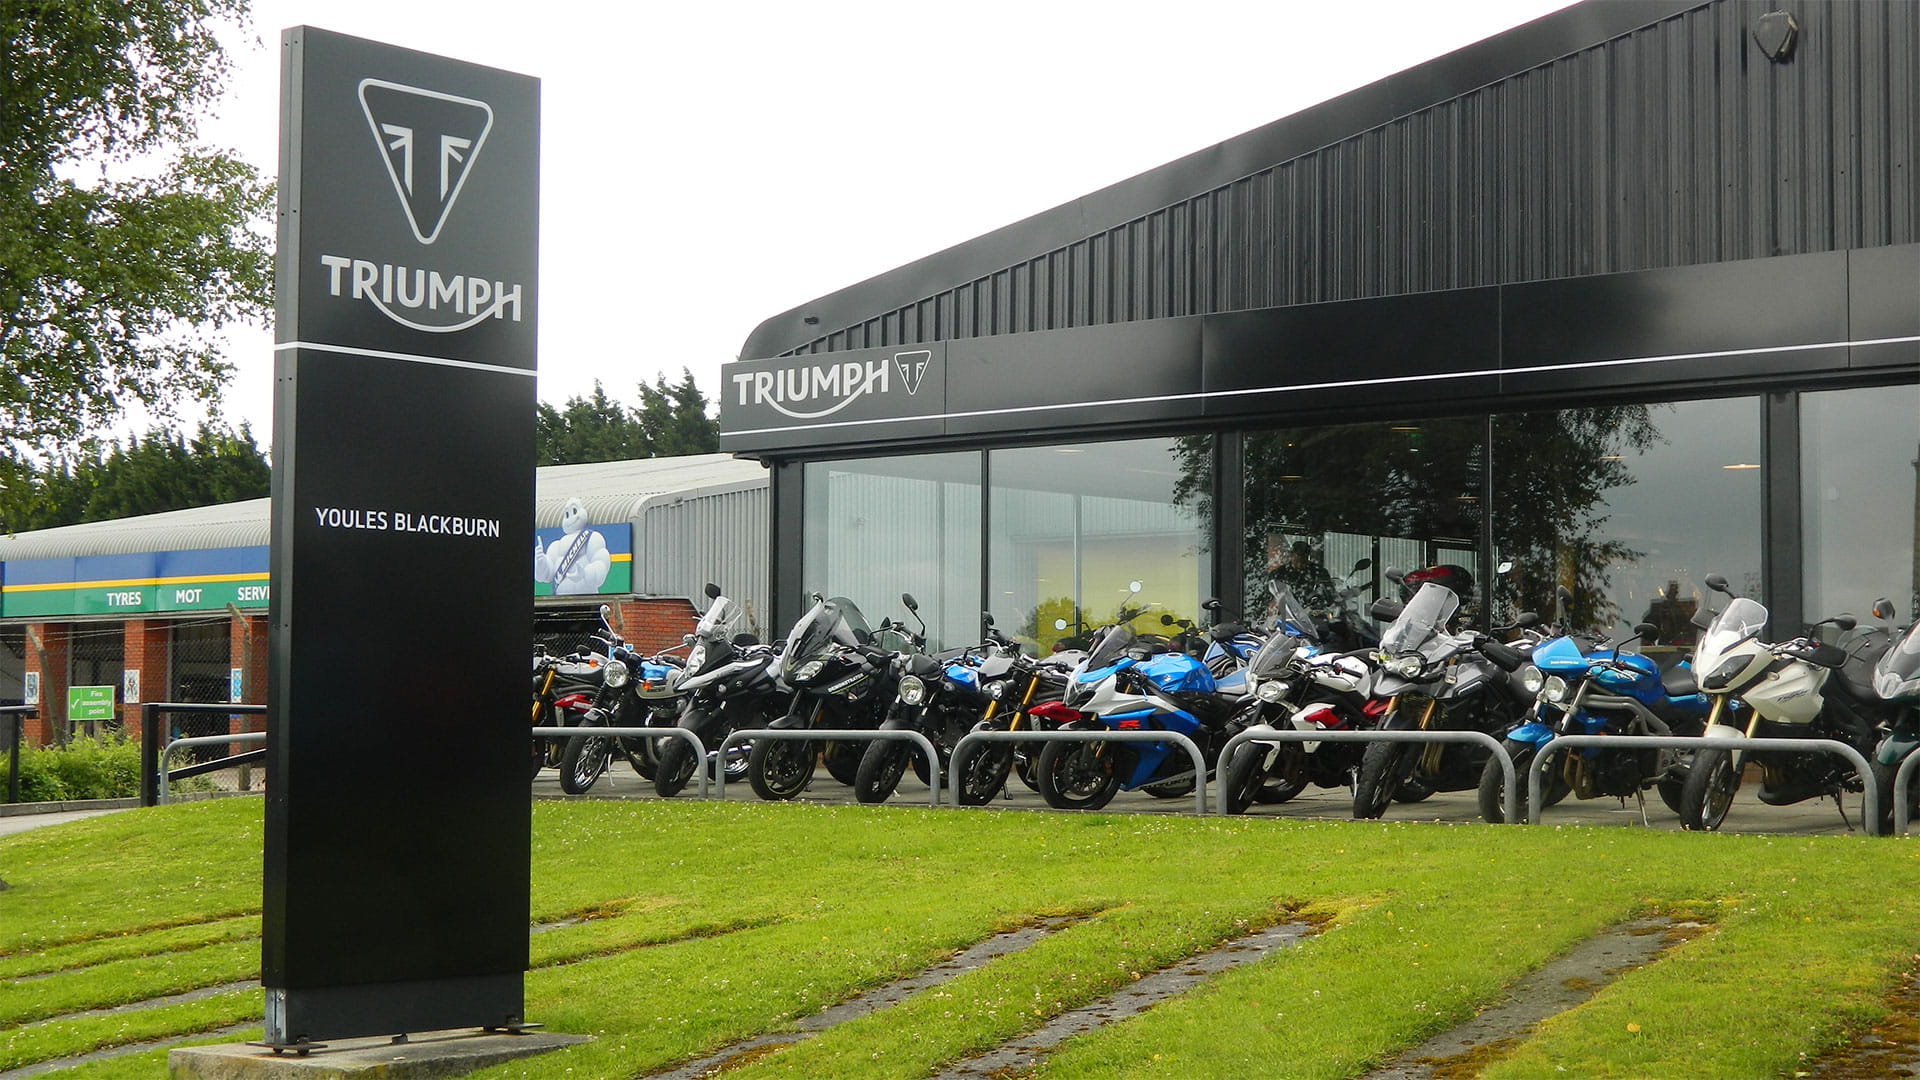 Triumph motorcycles dealership in Blackburn - Youles motorcycles Blackburn